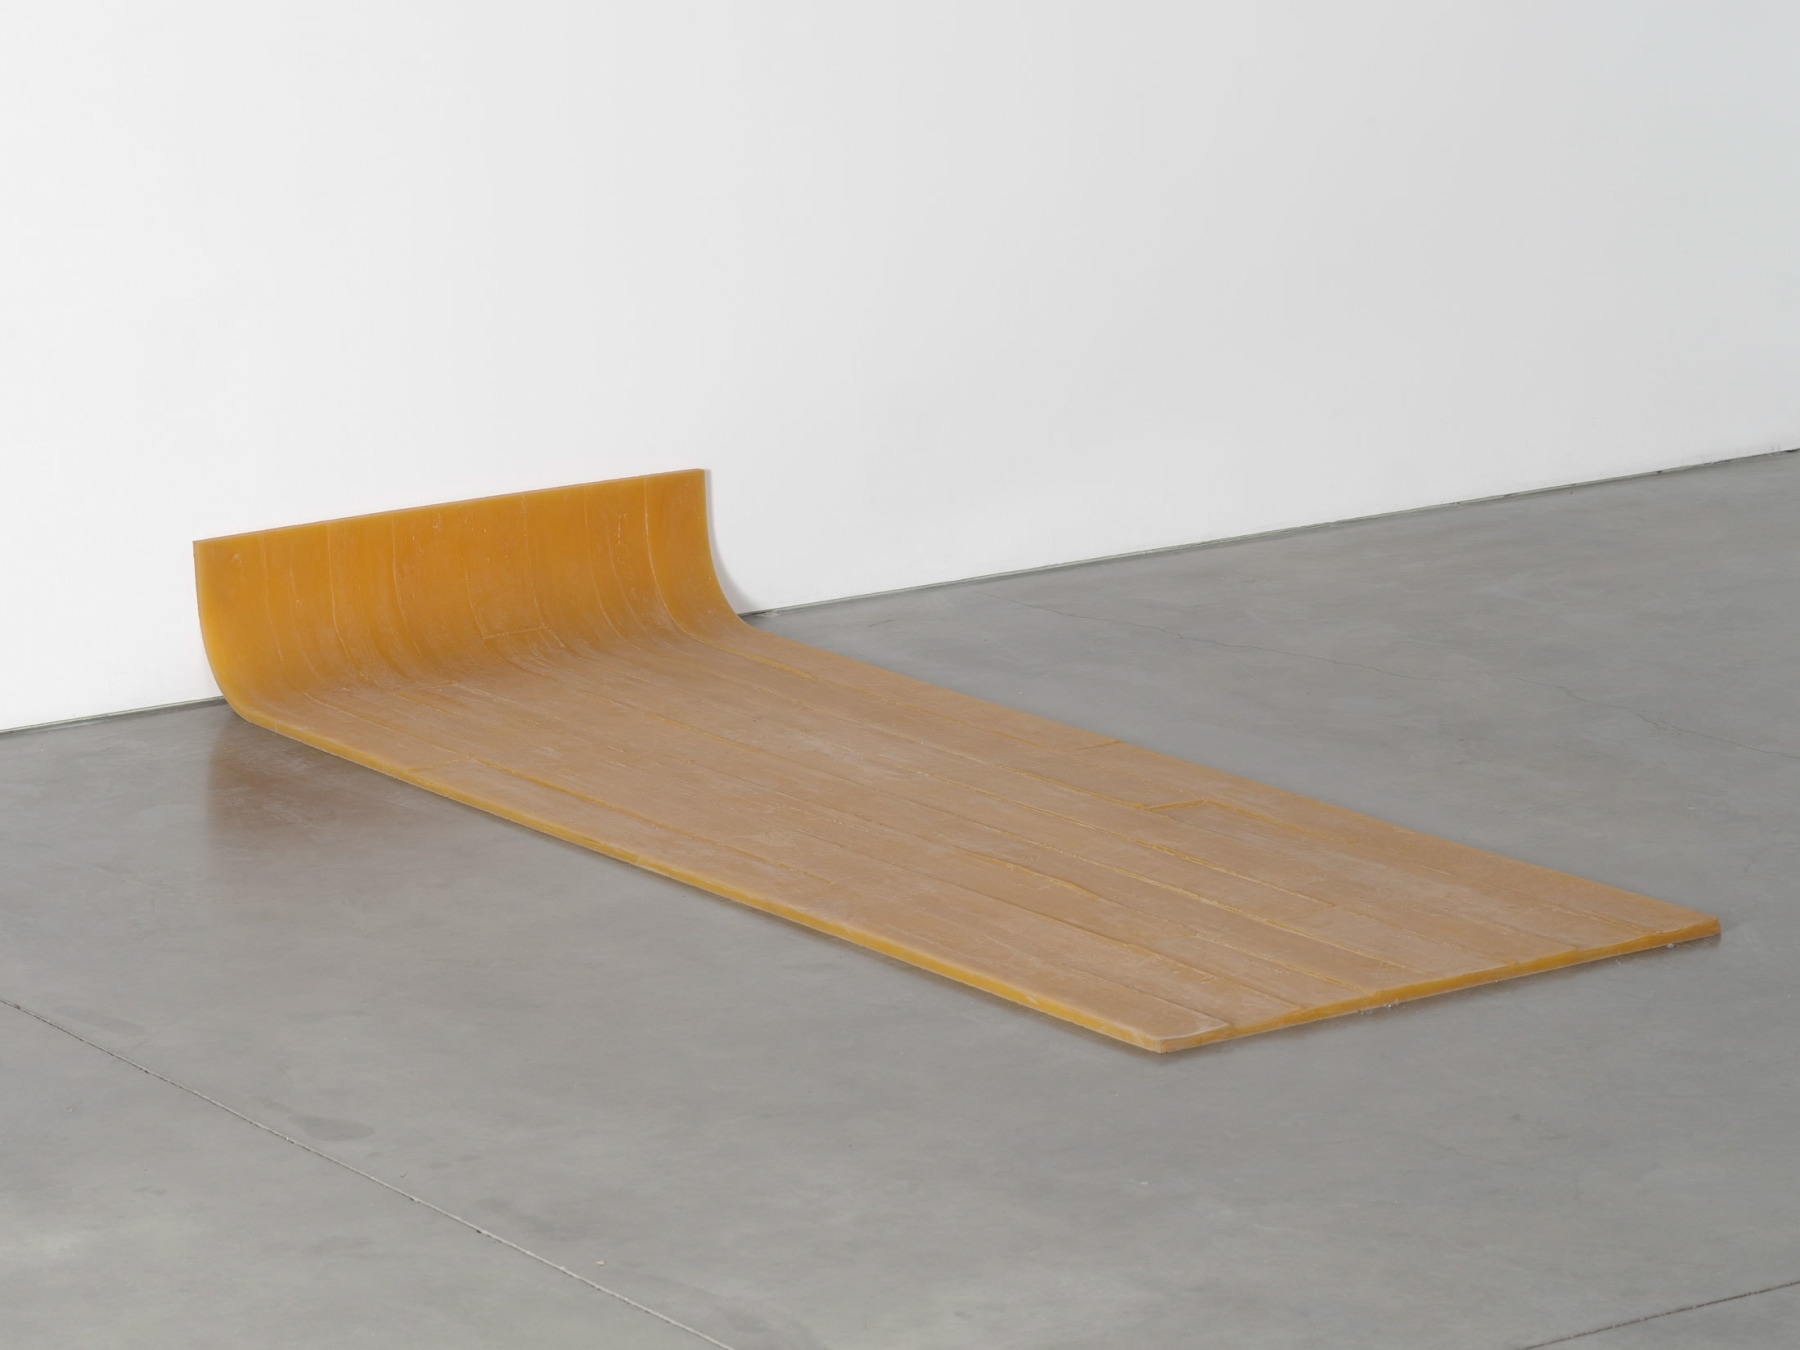 Rachel Whiteread, Untitled (Amber Floor), 1993